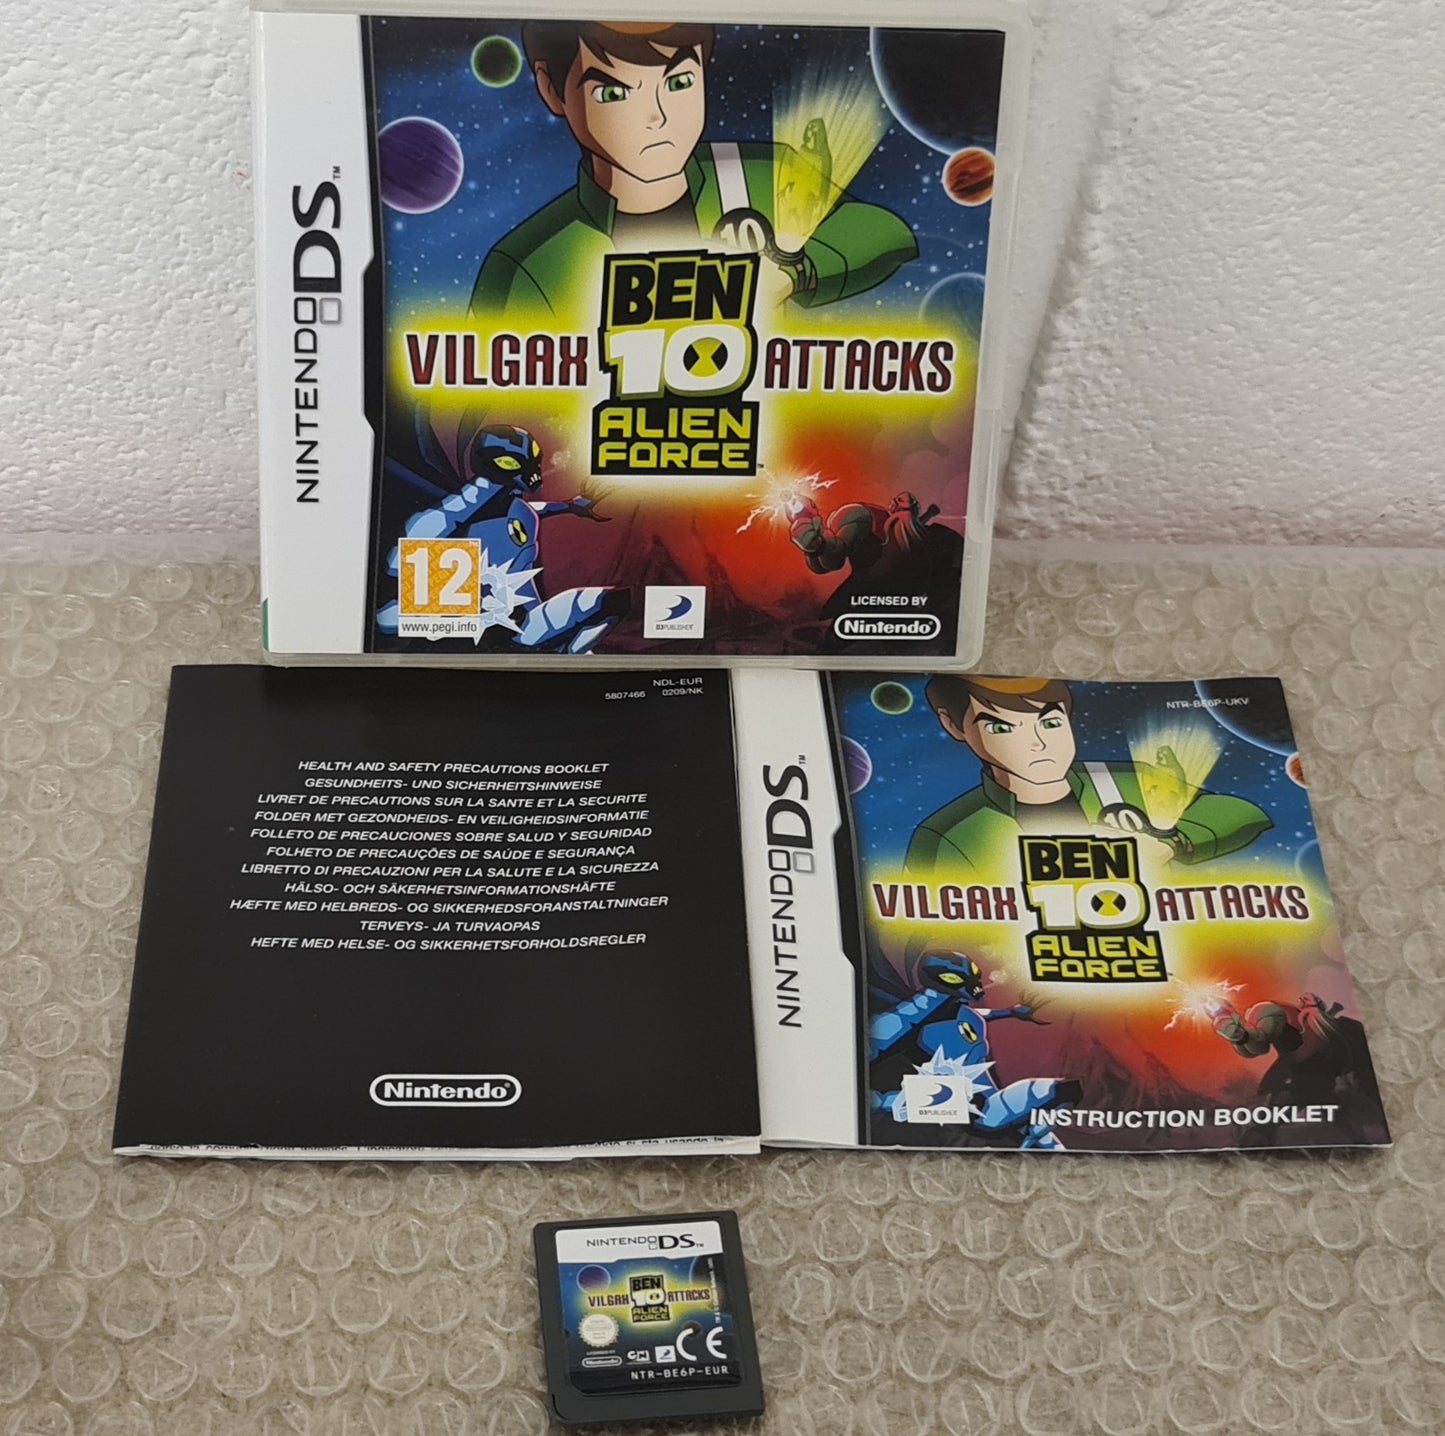 Ben 10 Alien Force Vilgax Attacks Nintendo DS Game